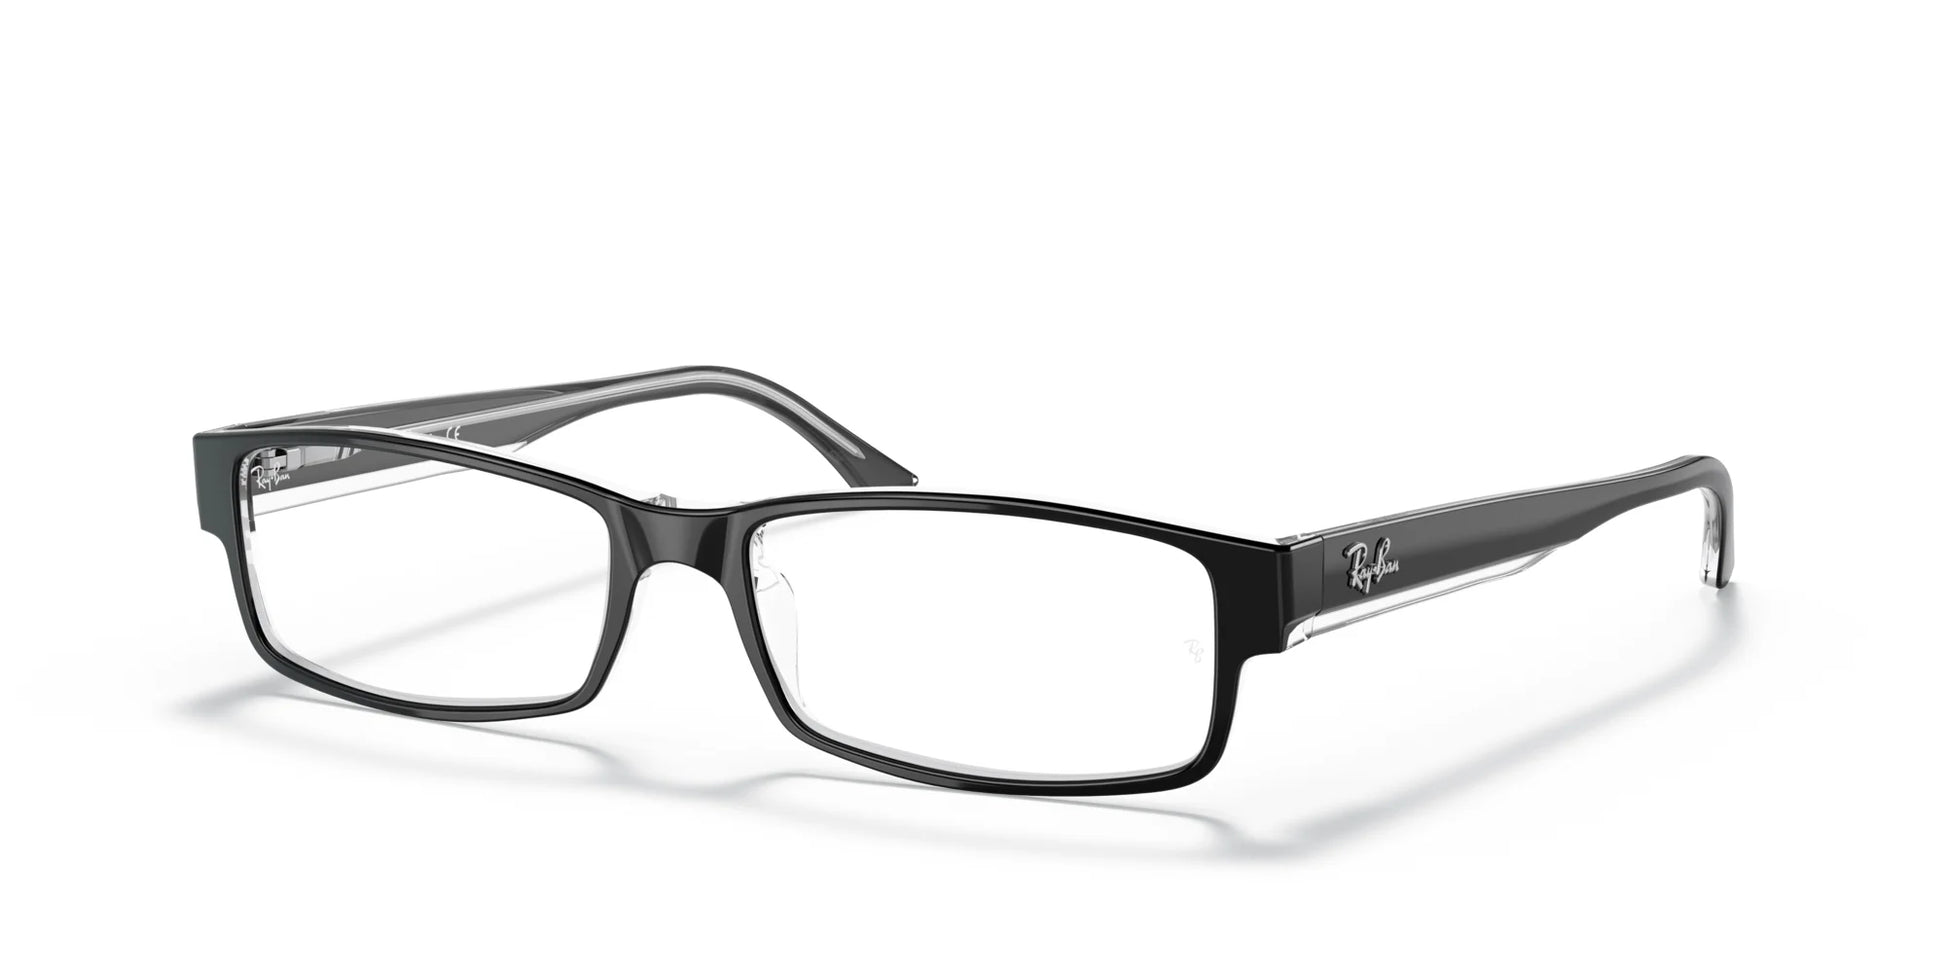 Ray-Ban RX5114 Eyeglasses Black On Transparent / Clear